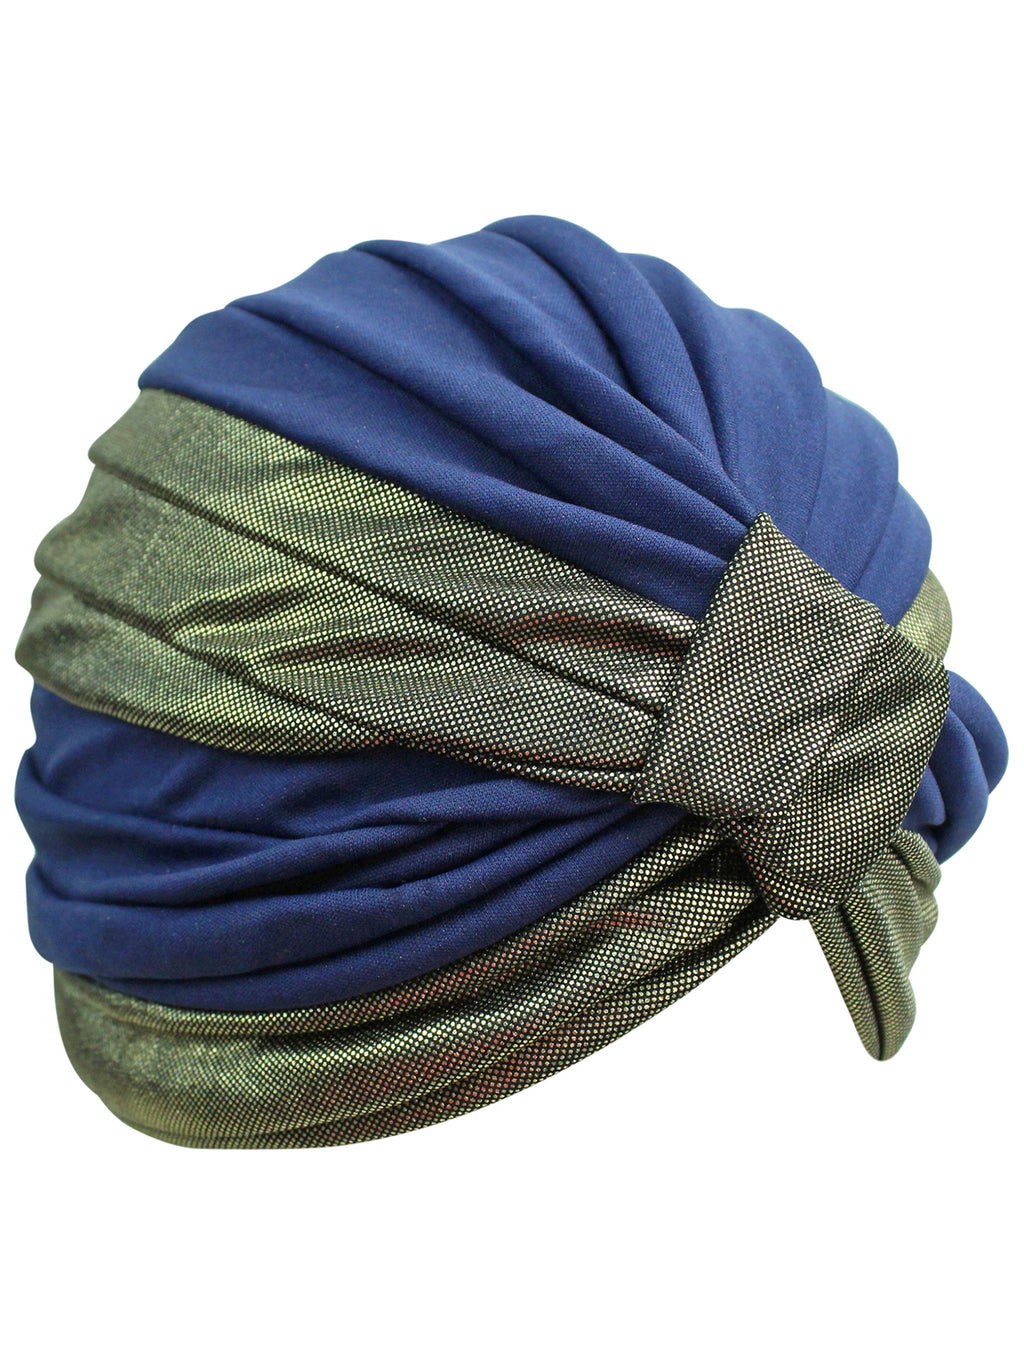 Gold Trim Fashion Turban Head Wrap For Women